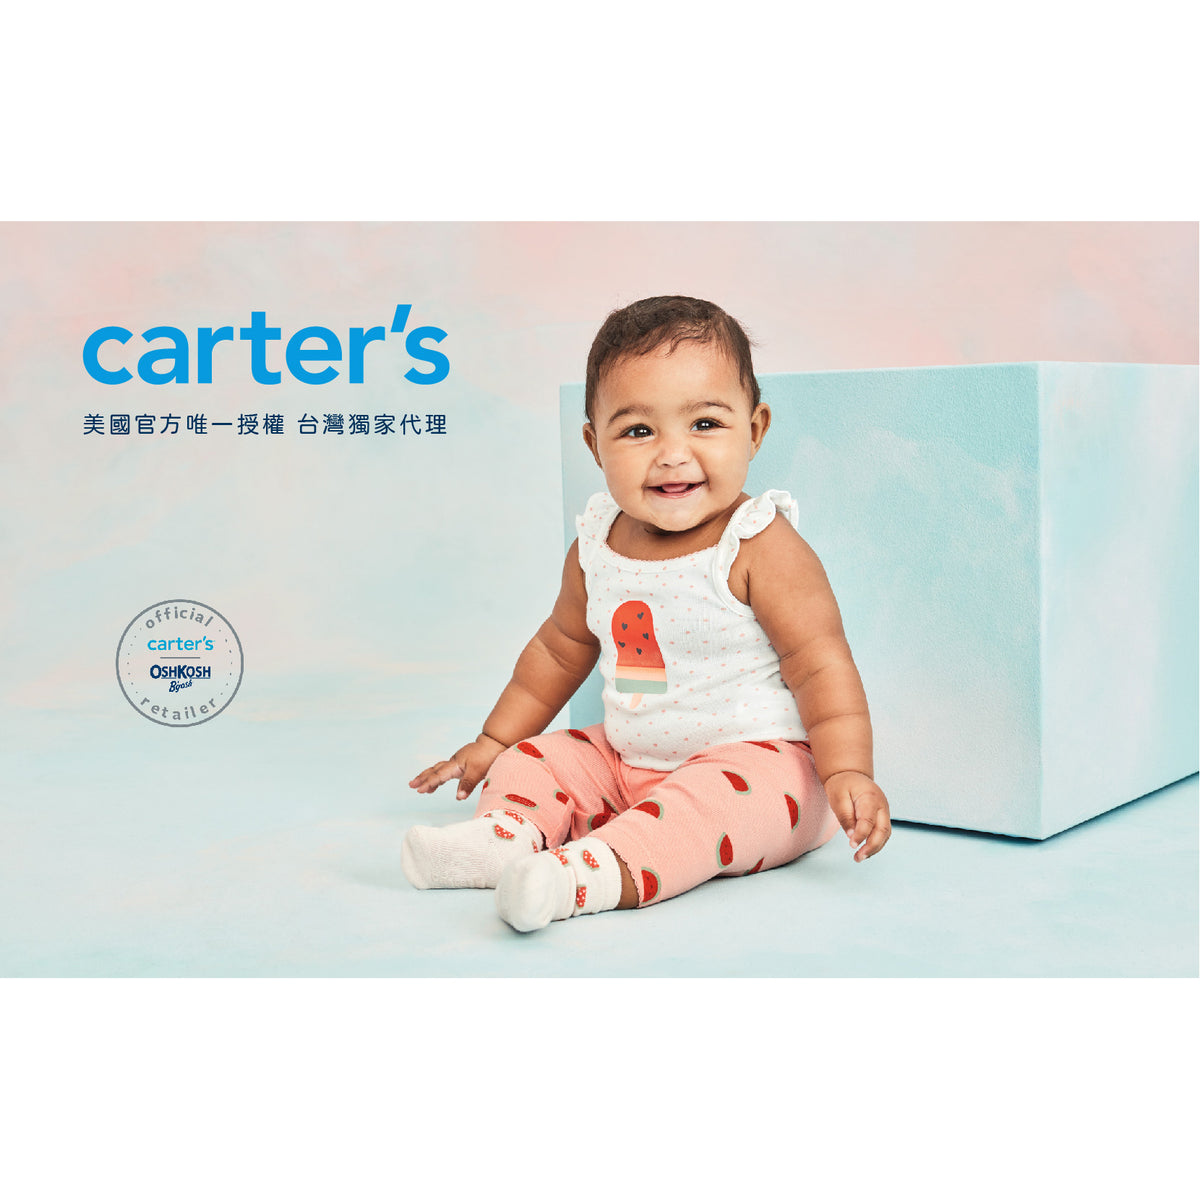 Carter's 粉色兔兔甜蜜3件組套裝(6M-24M)